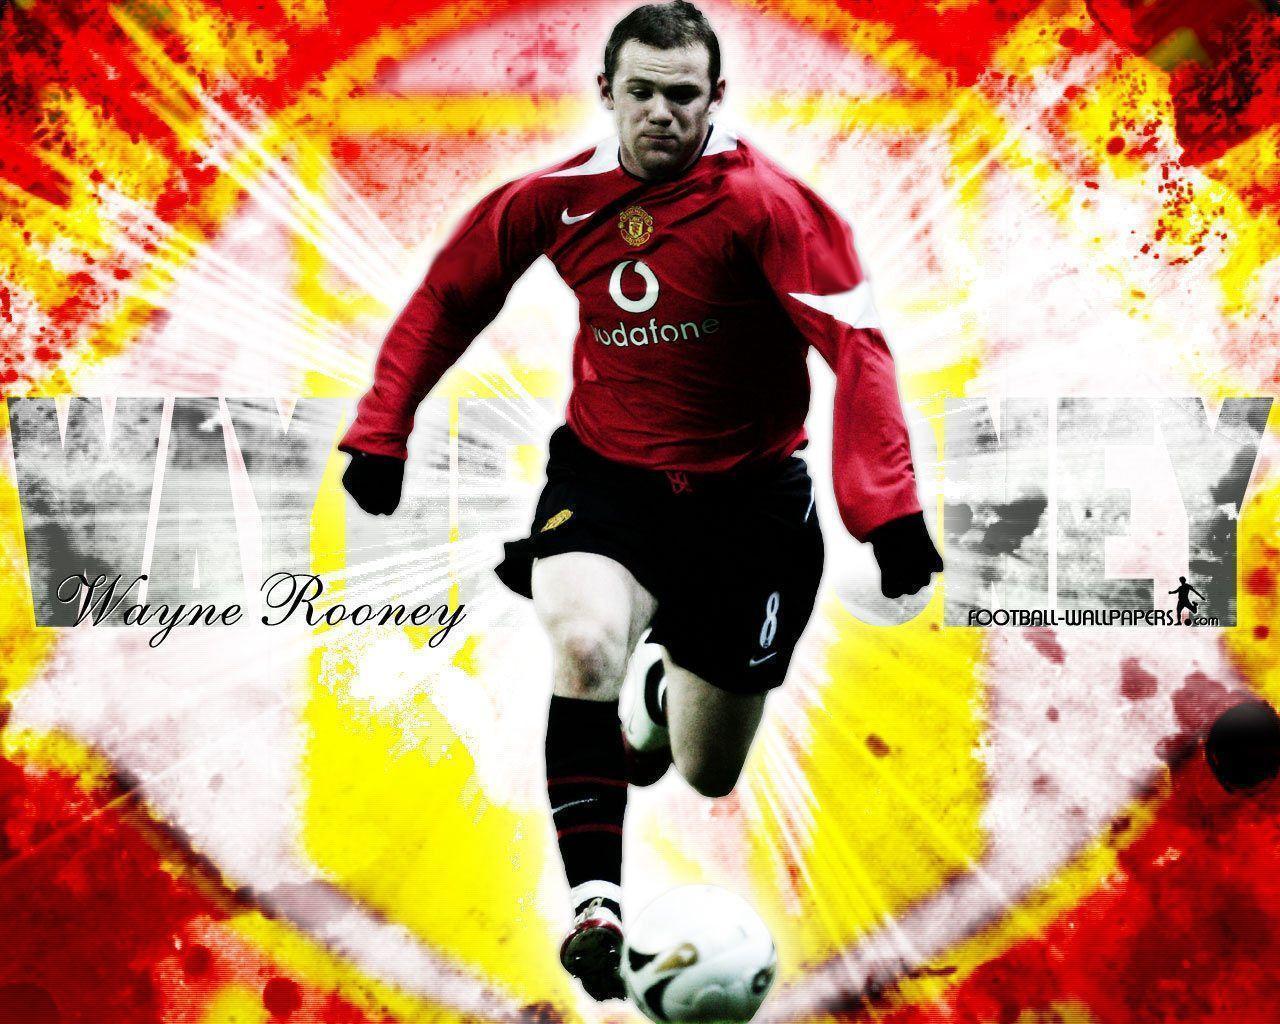 Wayne Rooney Wallpaper. Football Wallpaper and Videos